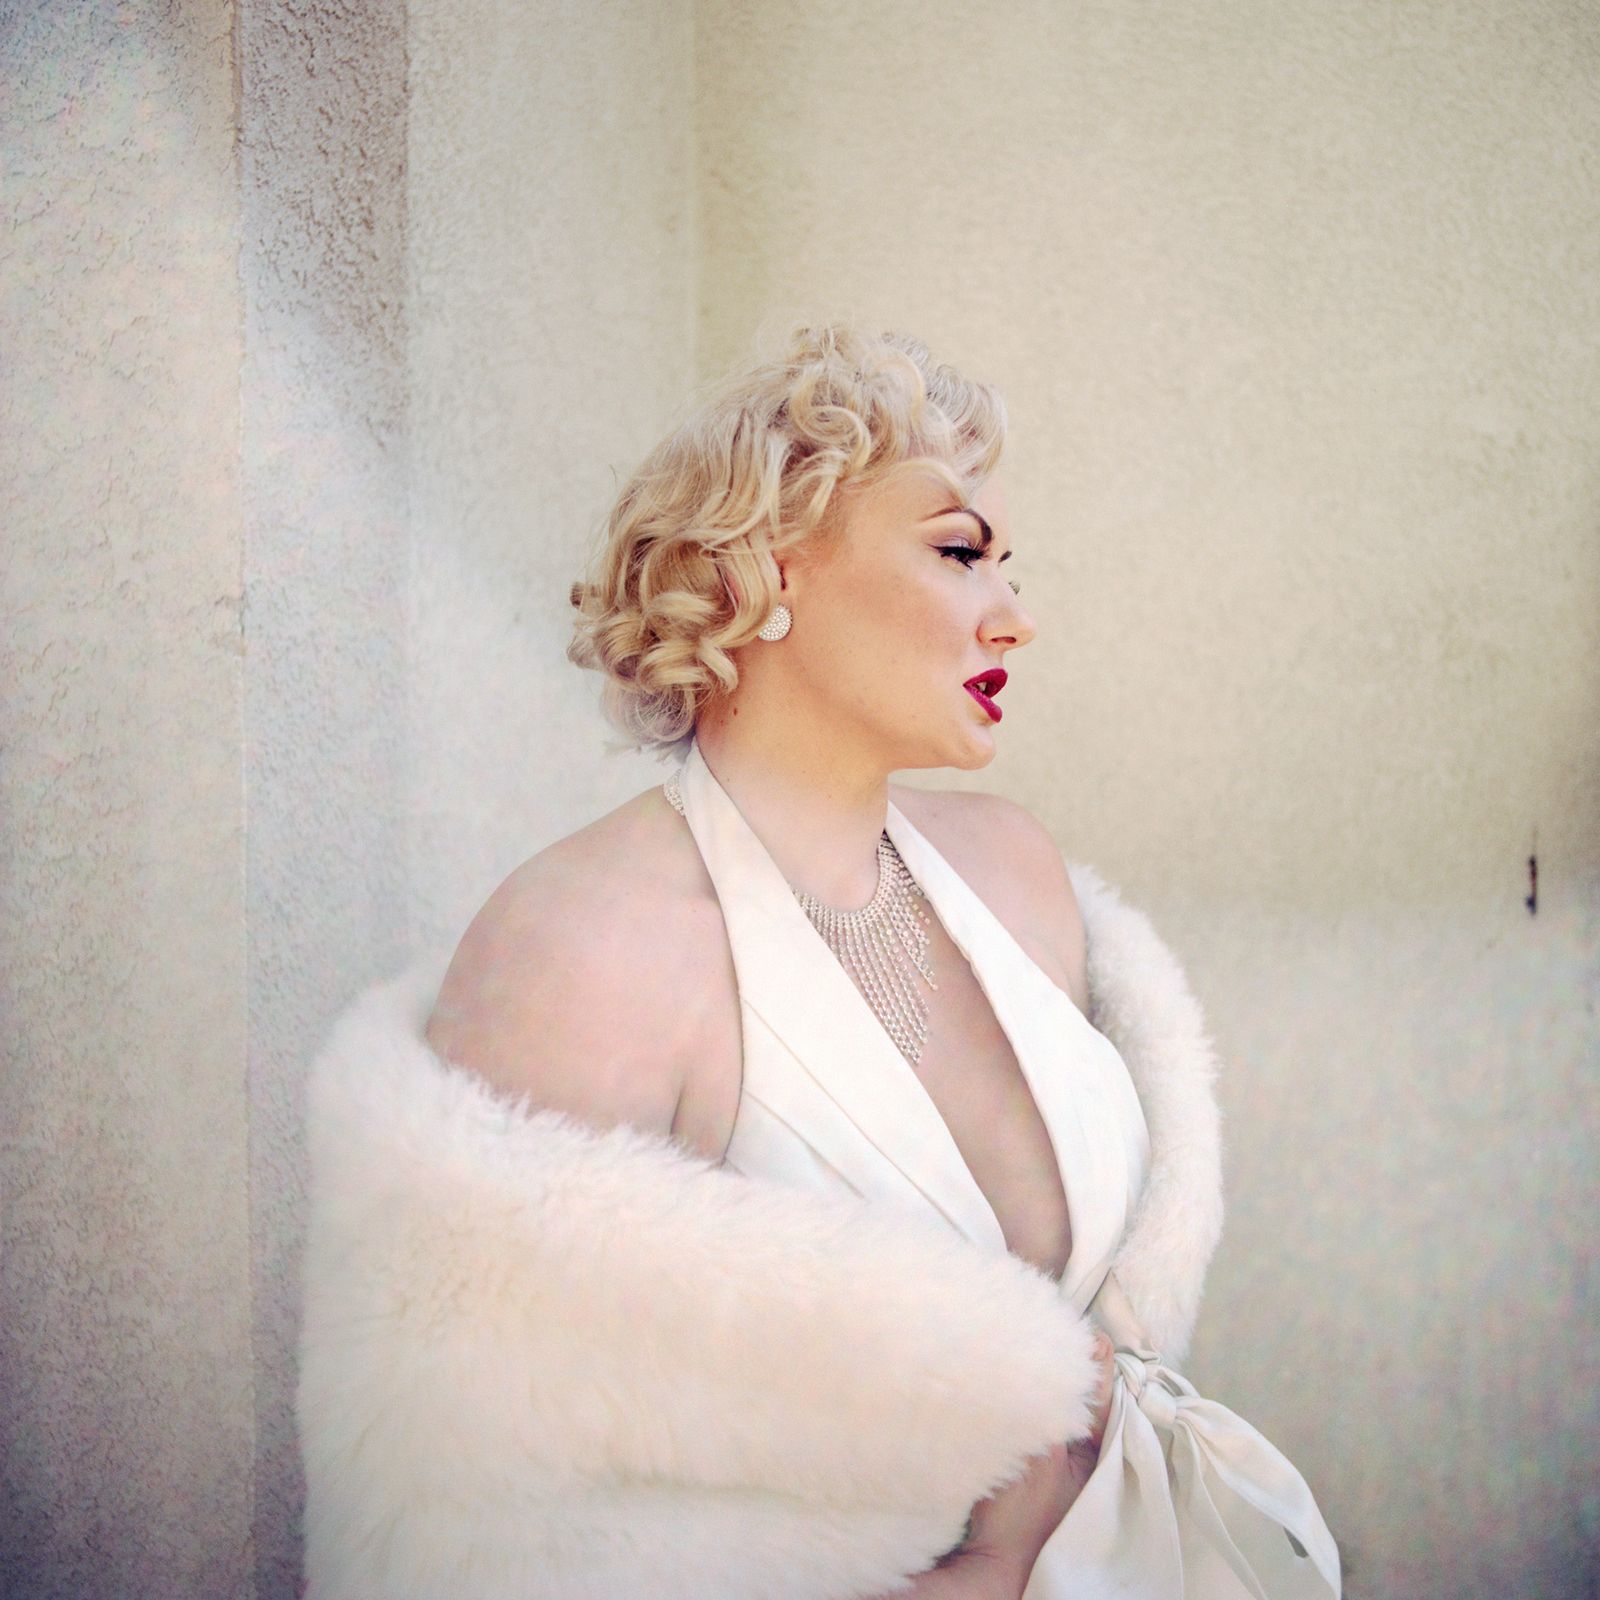 © Emily Berl - Emily as Marilyn Monroe, San Diego, CA, 2014.